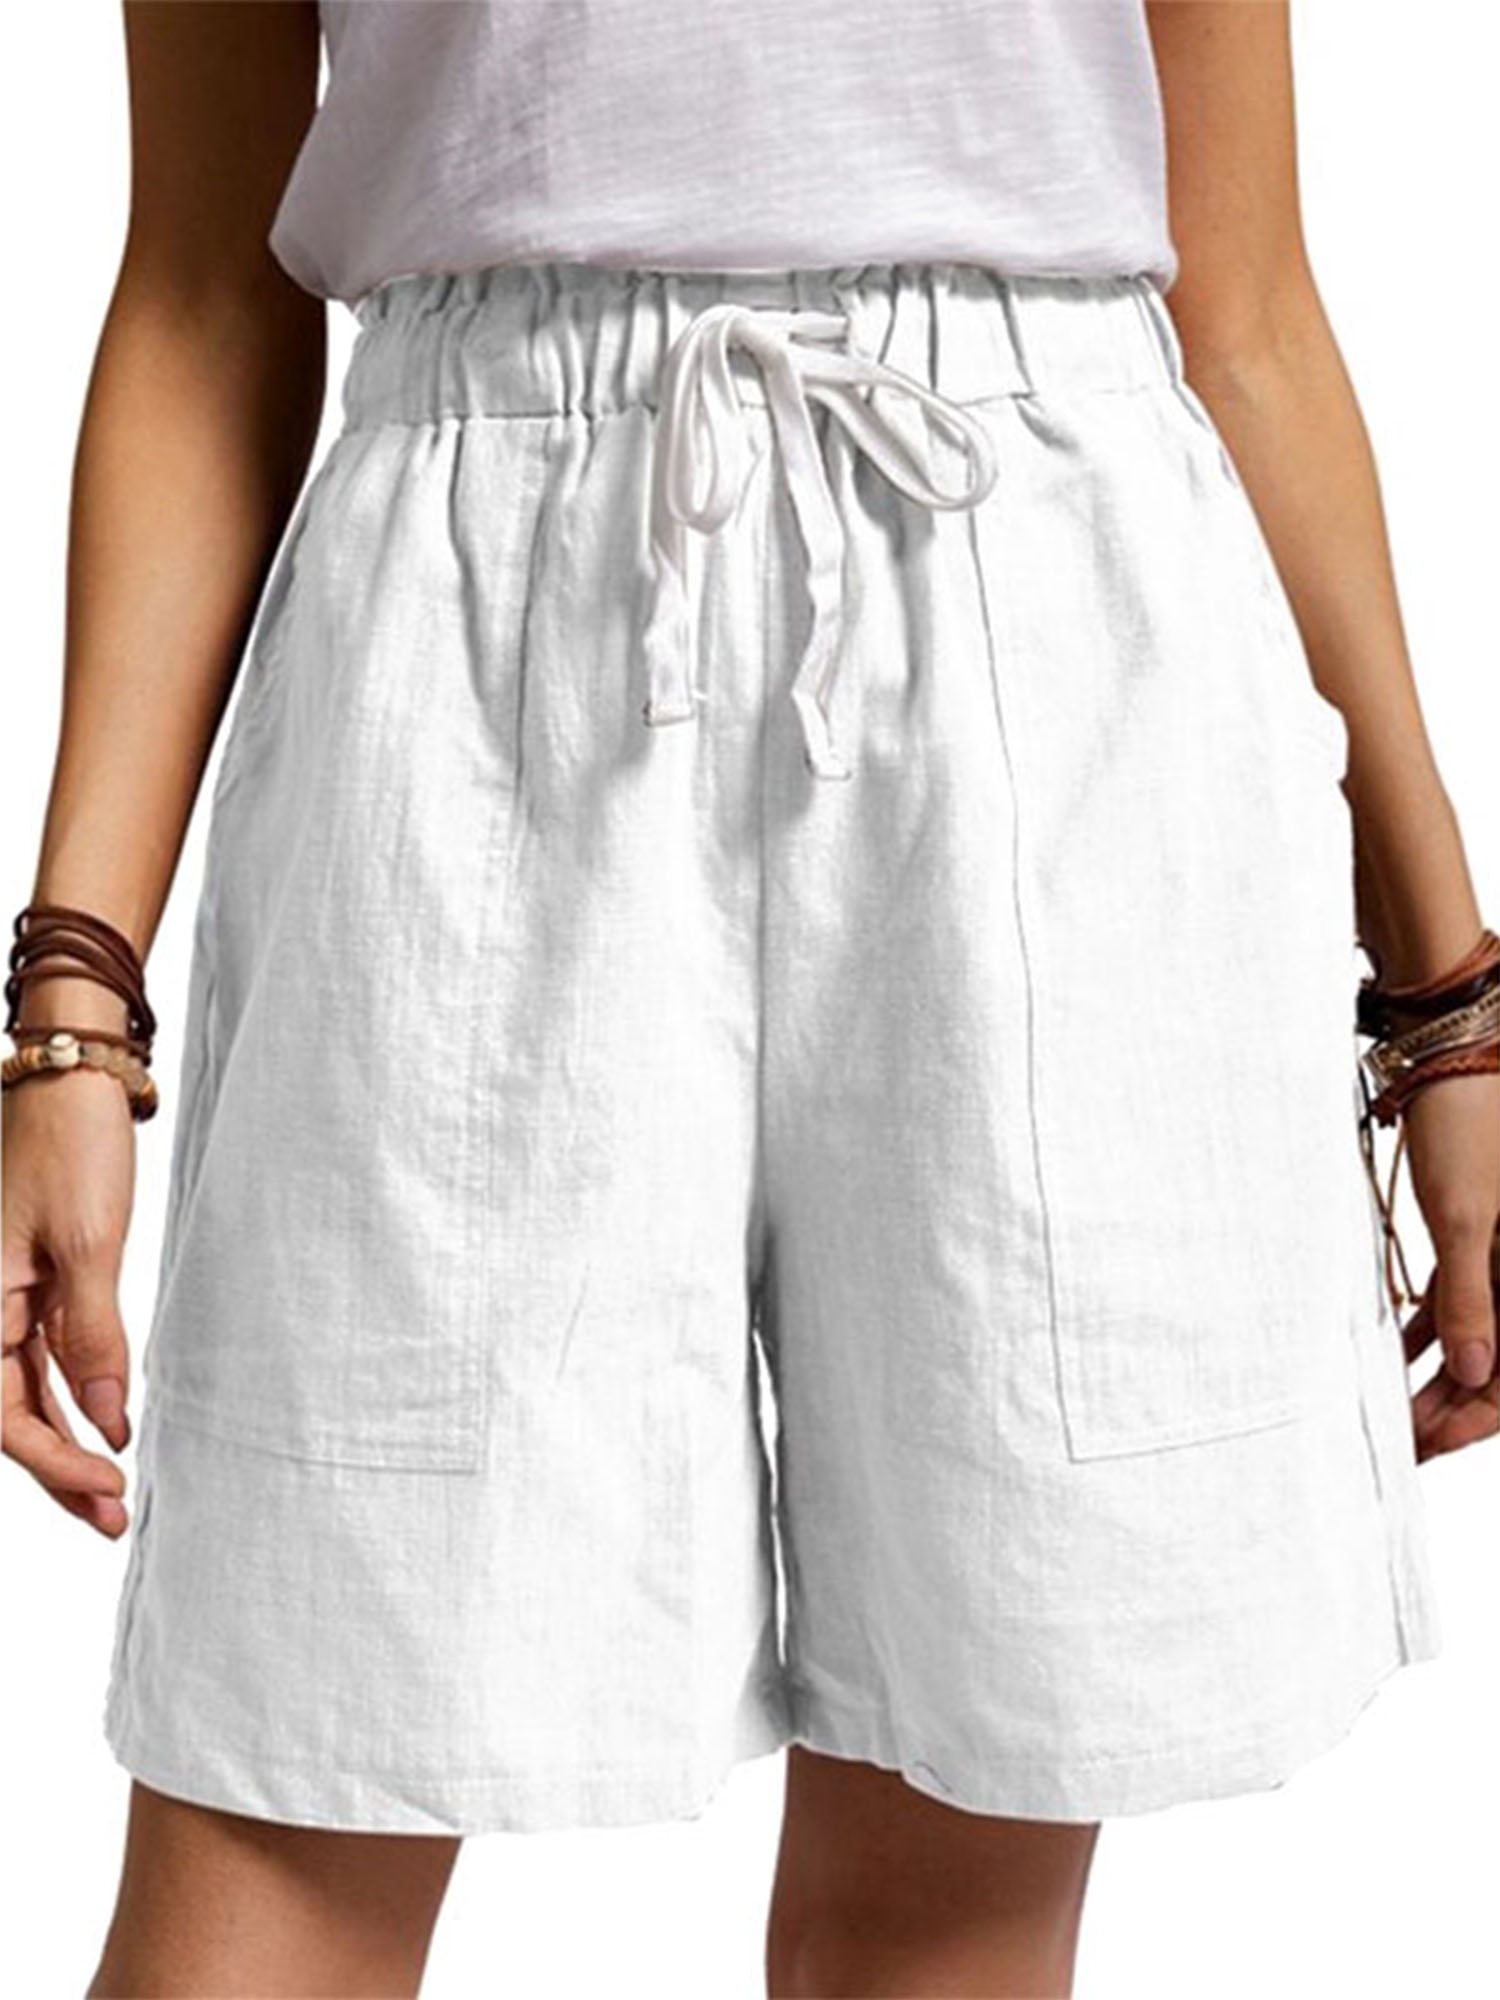 Women Cotton Linen Summer Short Pants Elastic Waist Pocket Casual Shorts Jersey Lounge Walking Shorts 